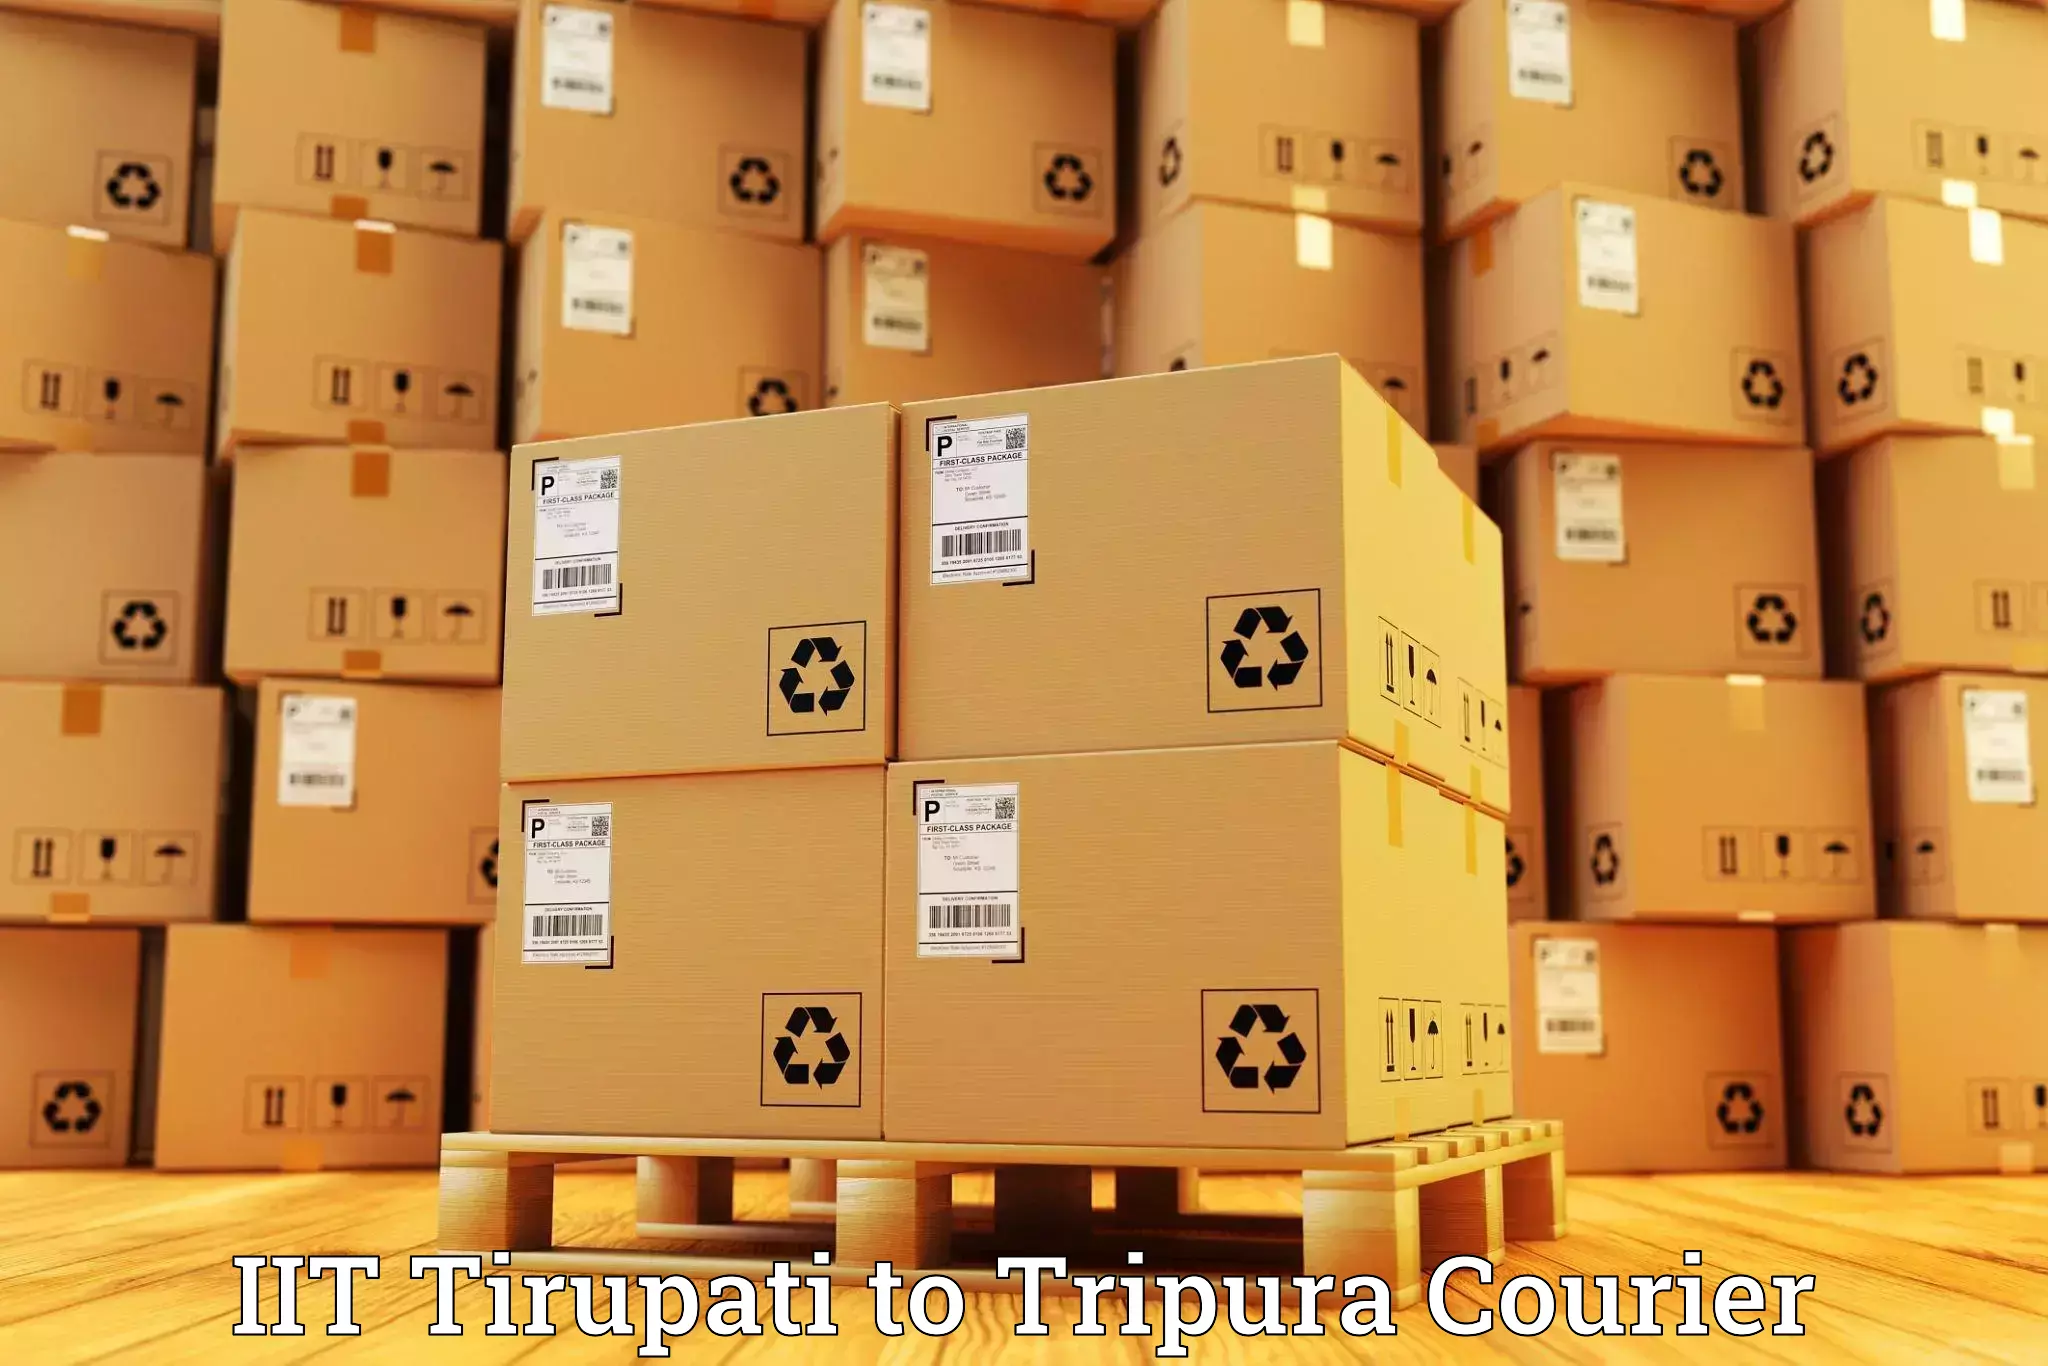 Tech-enabled shipping IIT Tirupati to Tripura